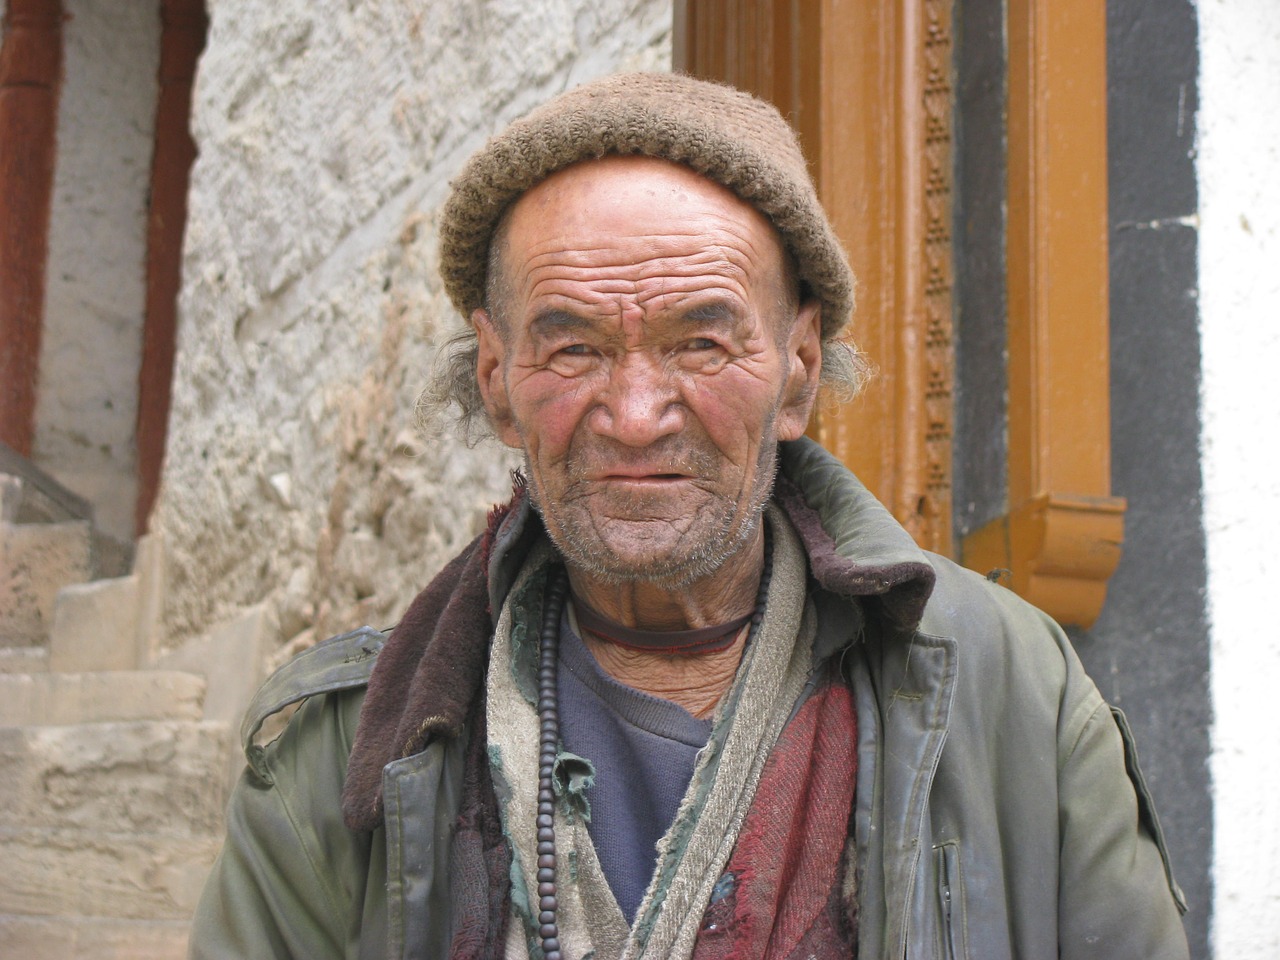 oldman ladakhi portrait free photo